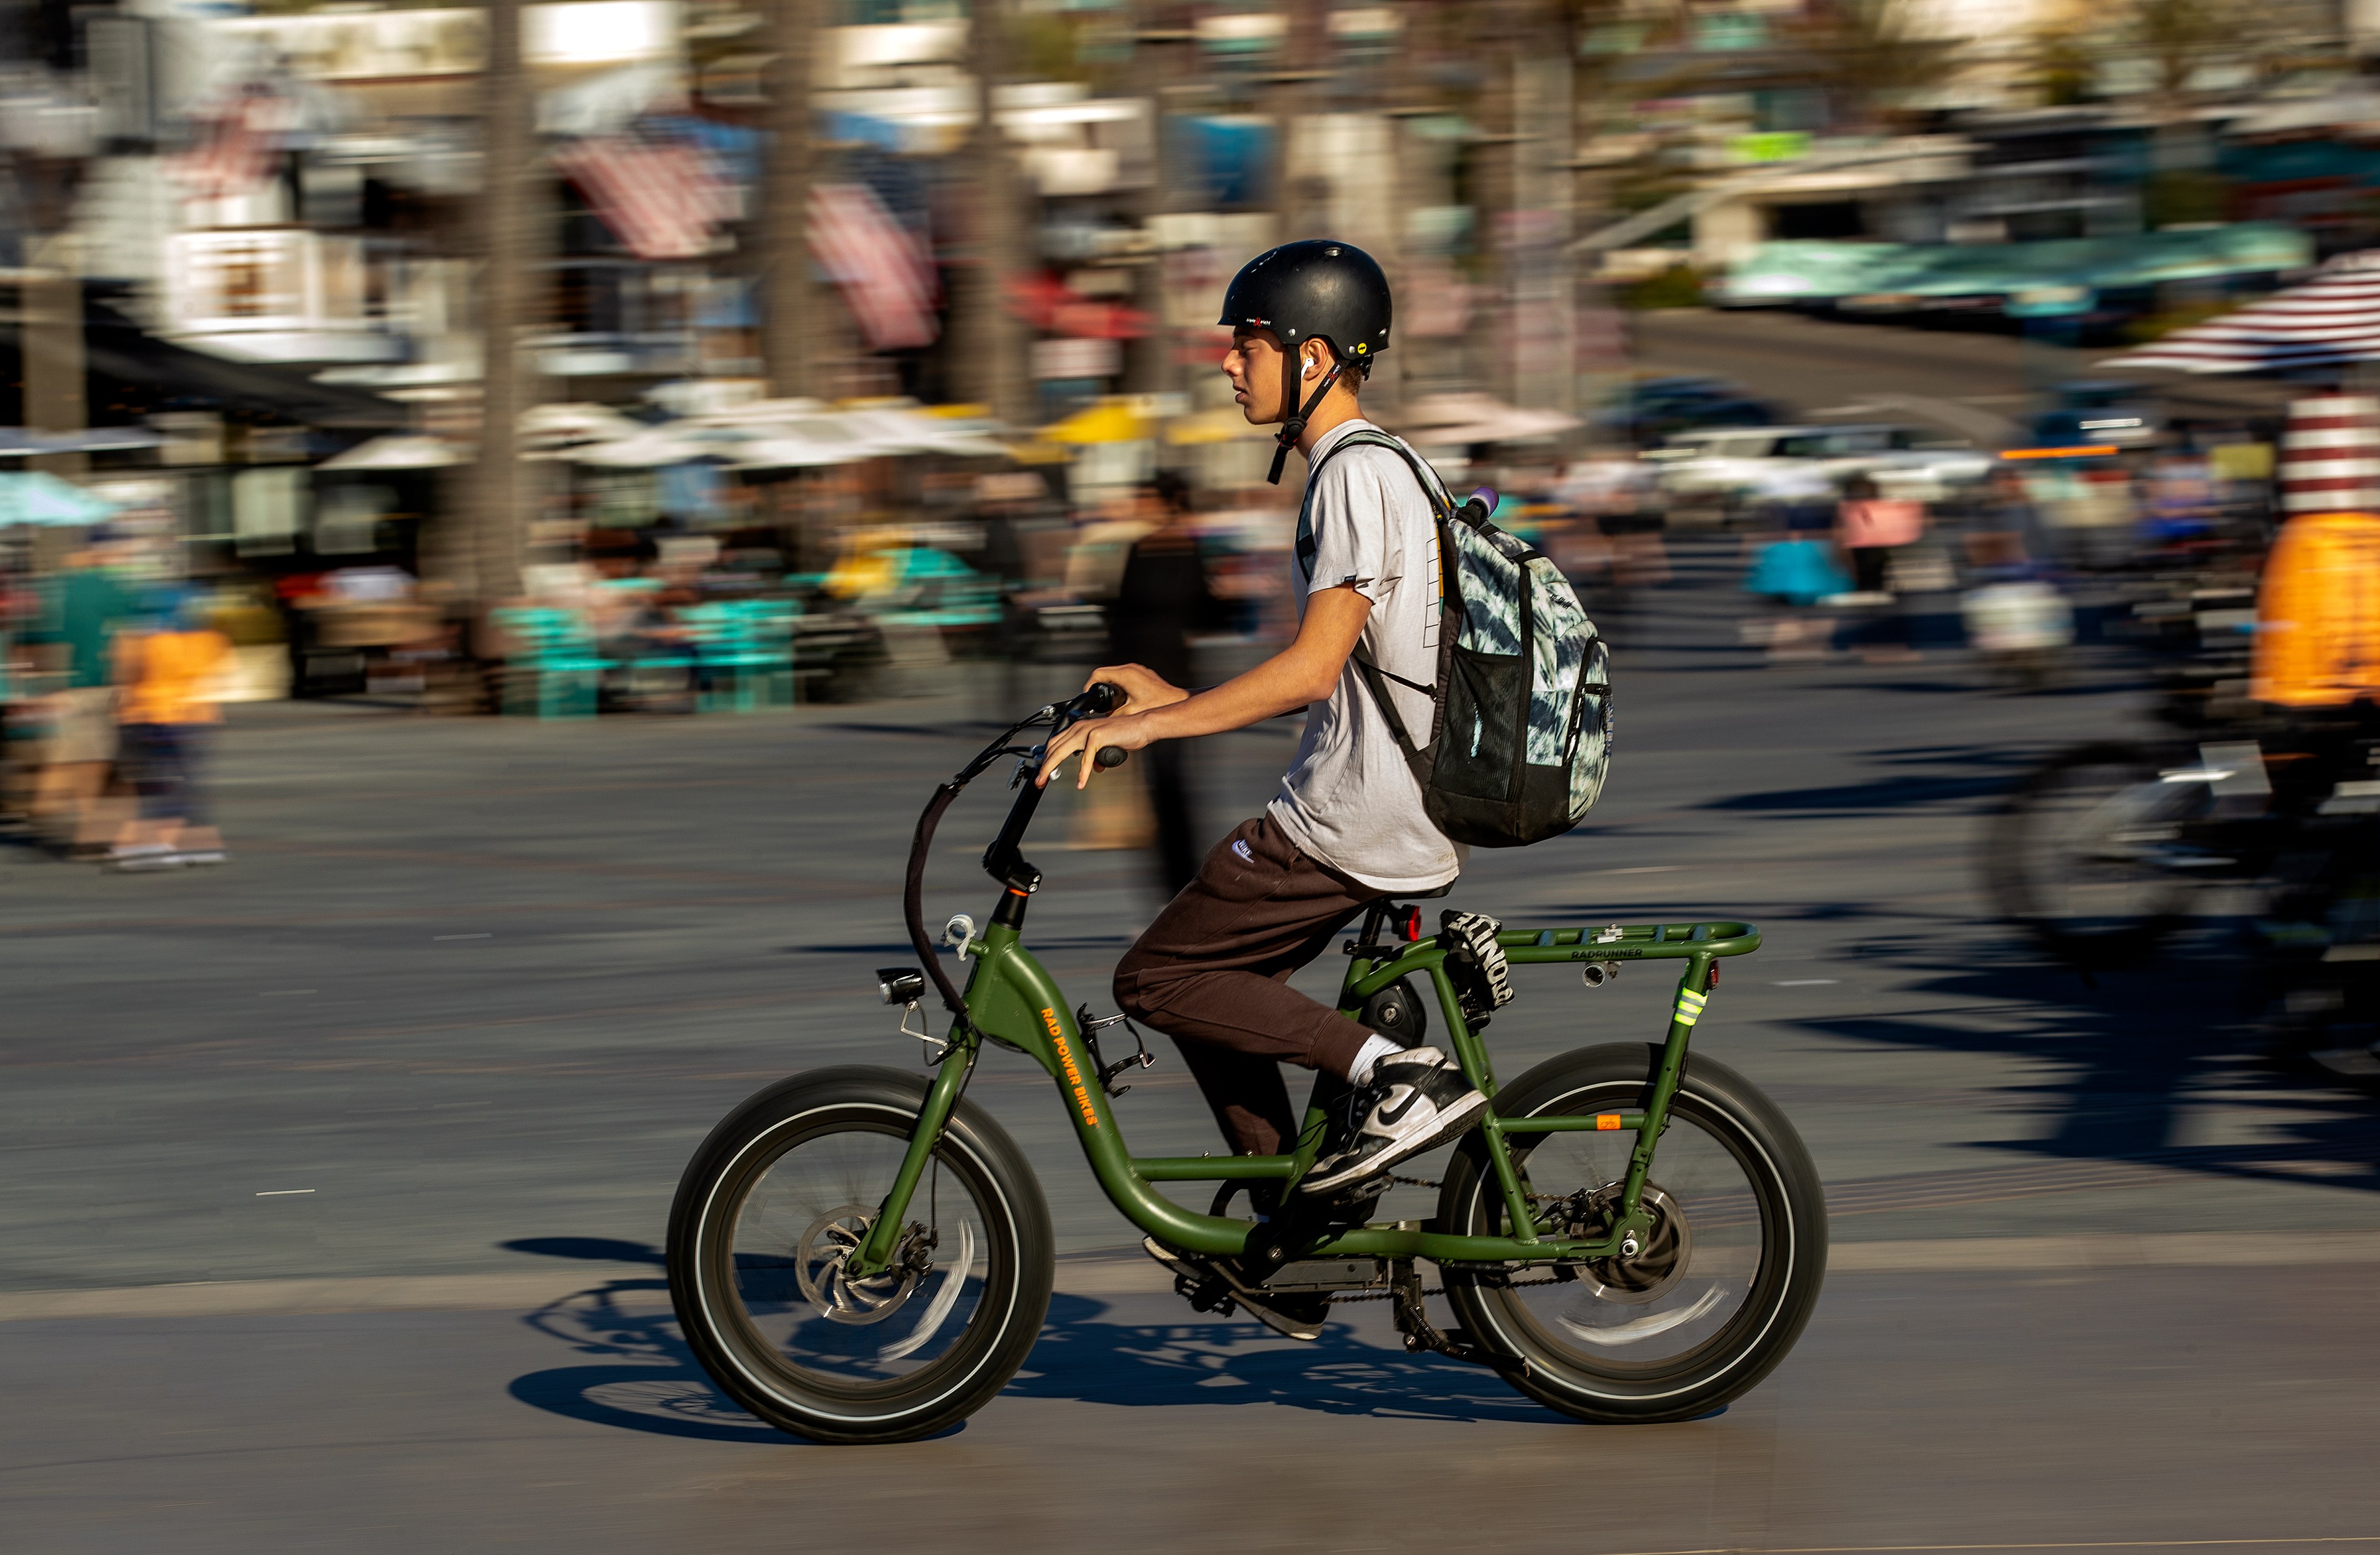 A person rides a green bike.